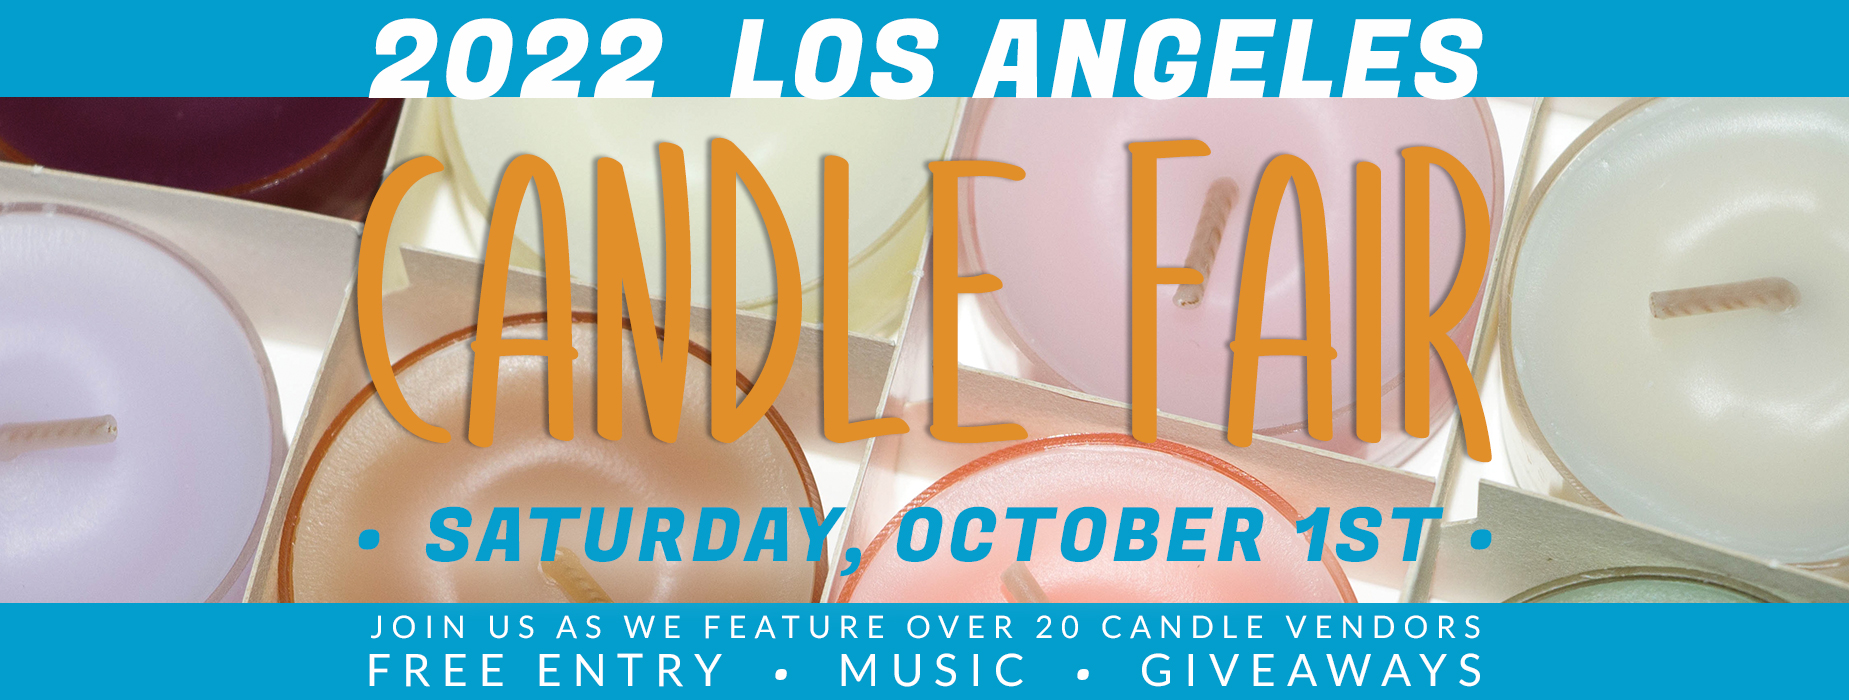 candle fair Los Angeles